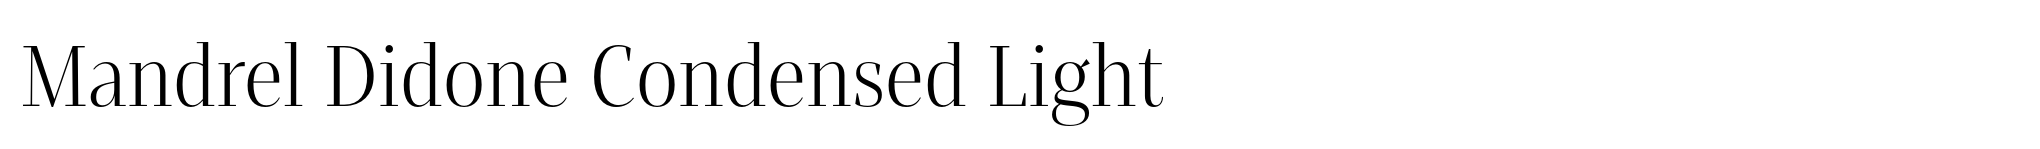 Mandrel Didone Condensed Light image